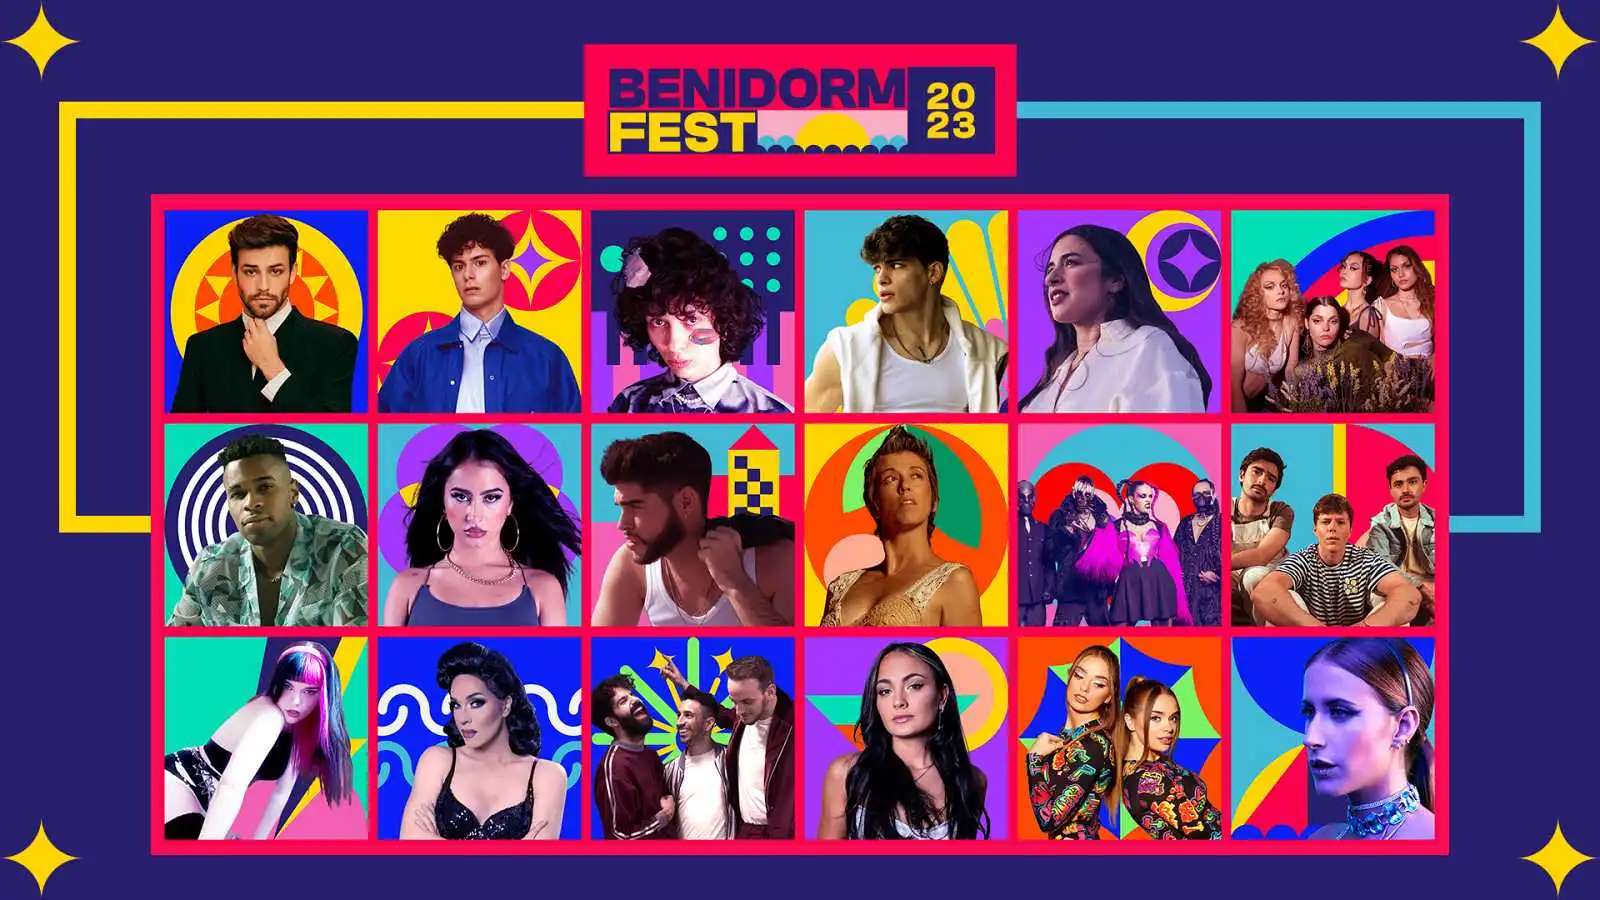 Candidatos para Benidorm Fest